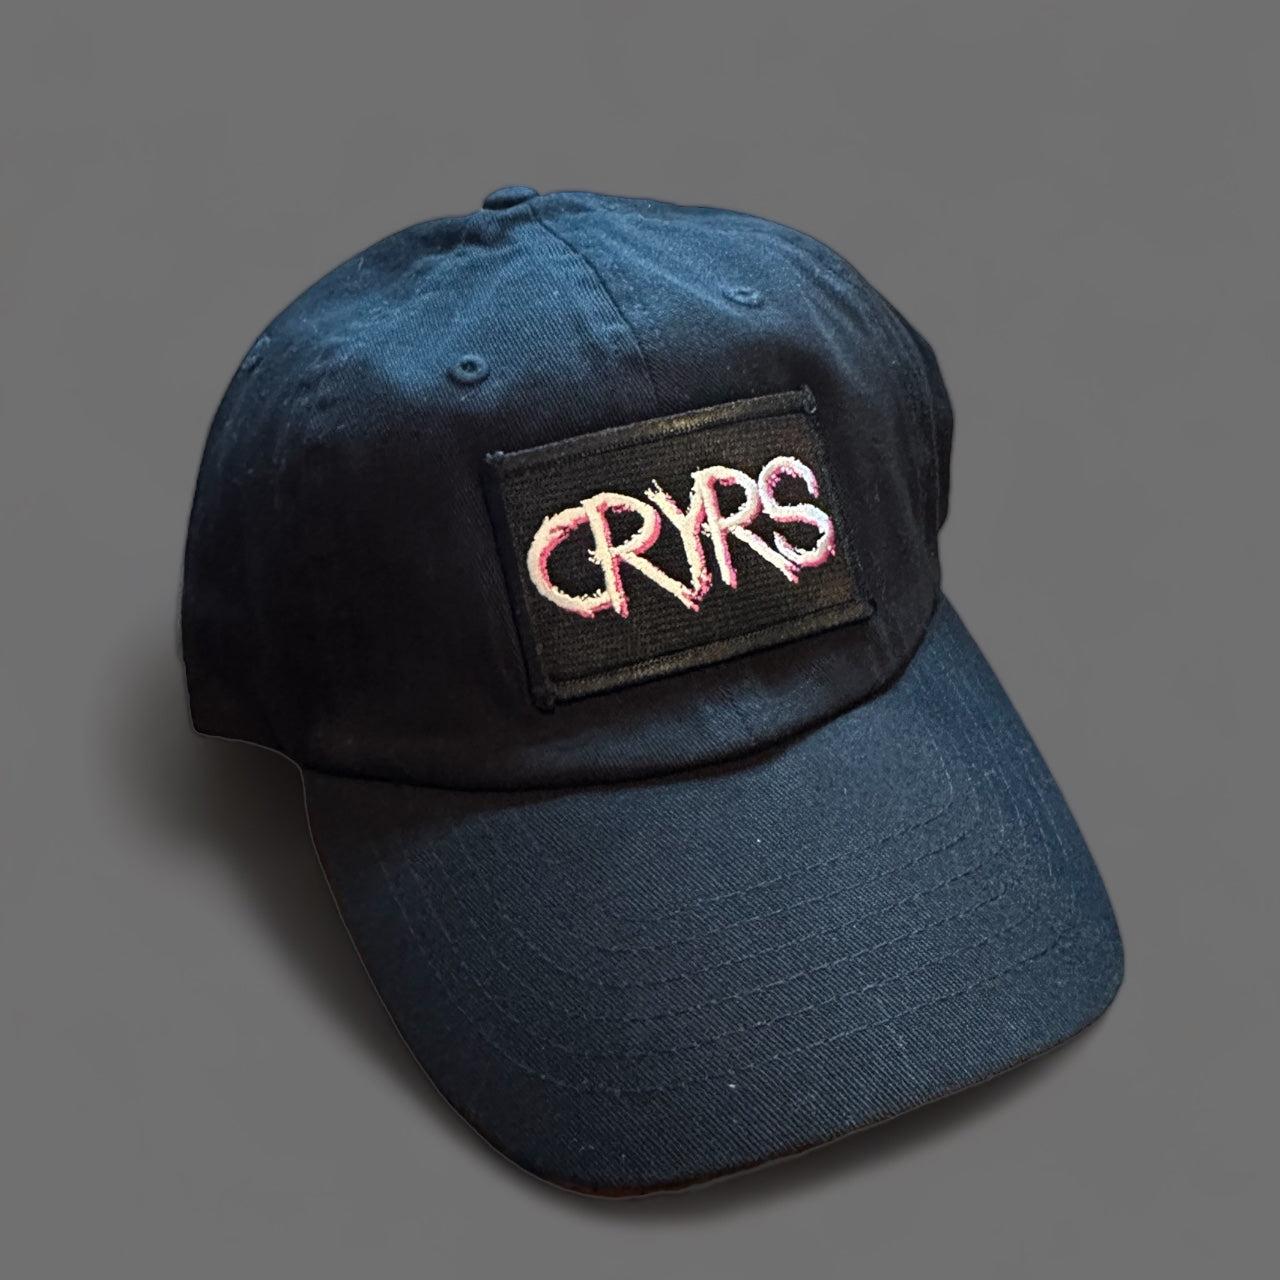 CRYRS Hat